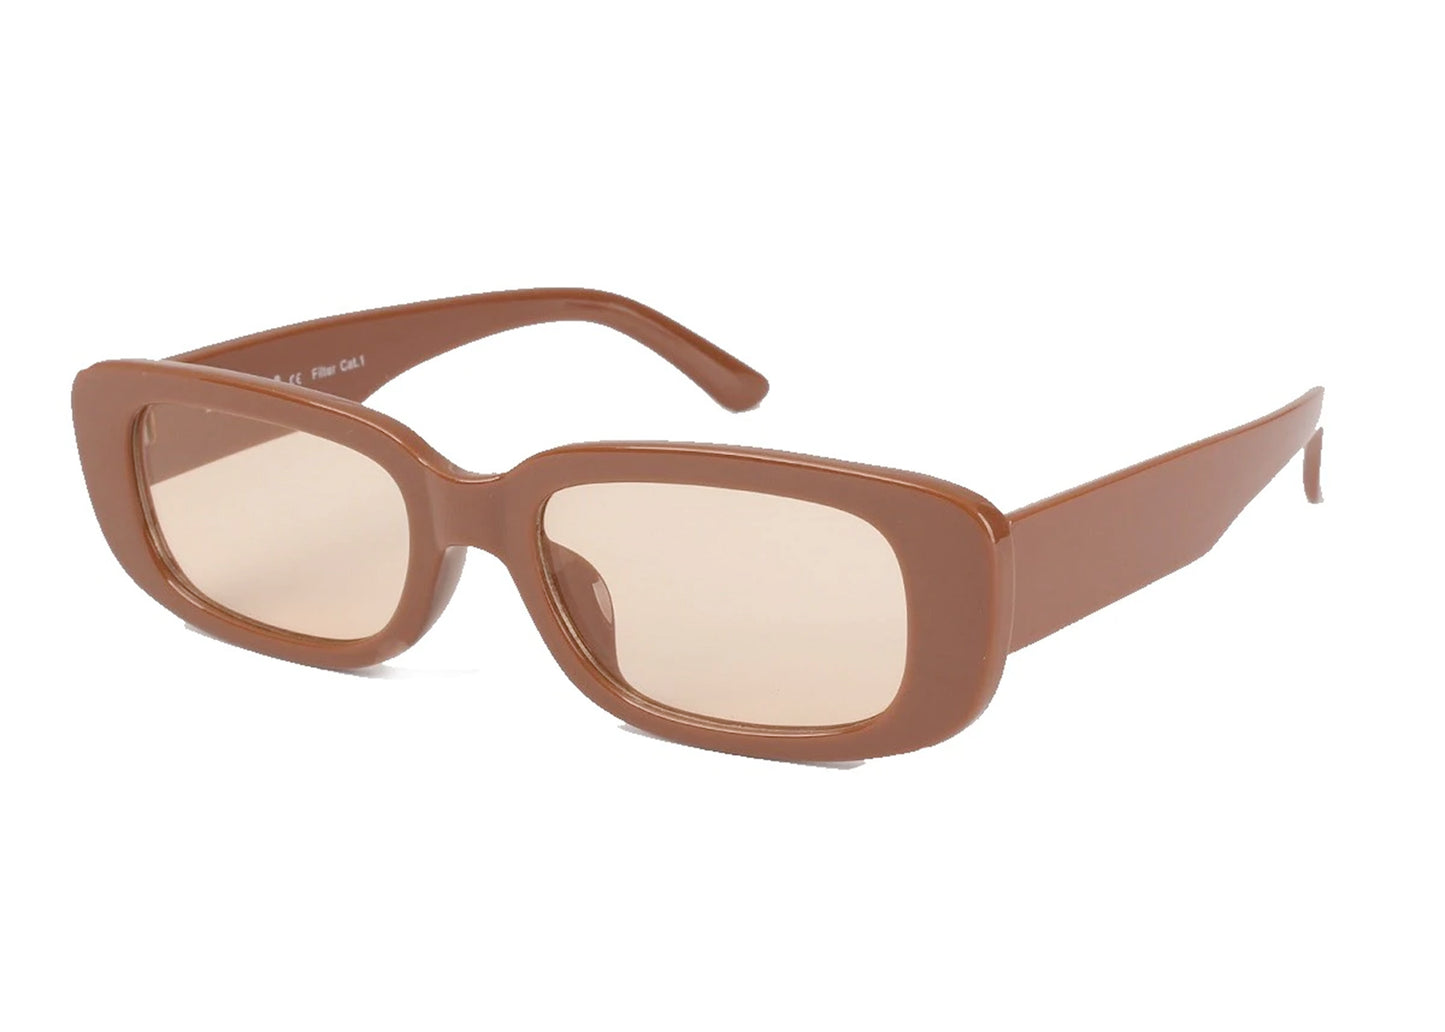 Callie Sunglasses in Brown